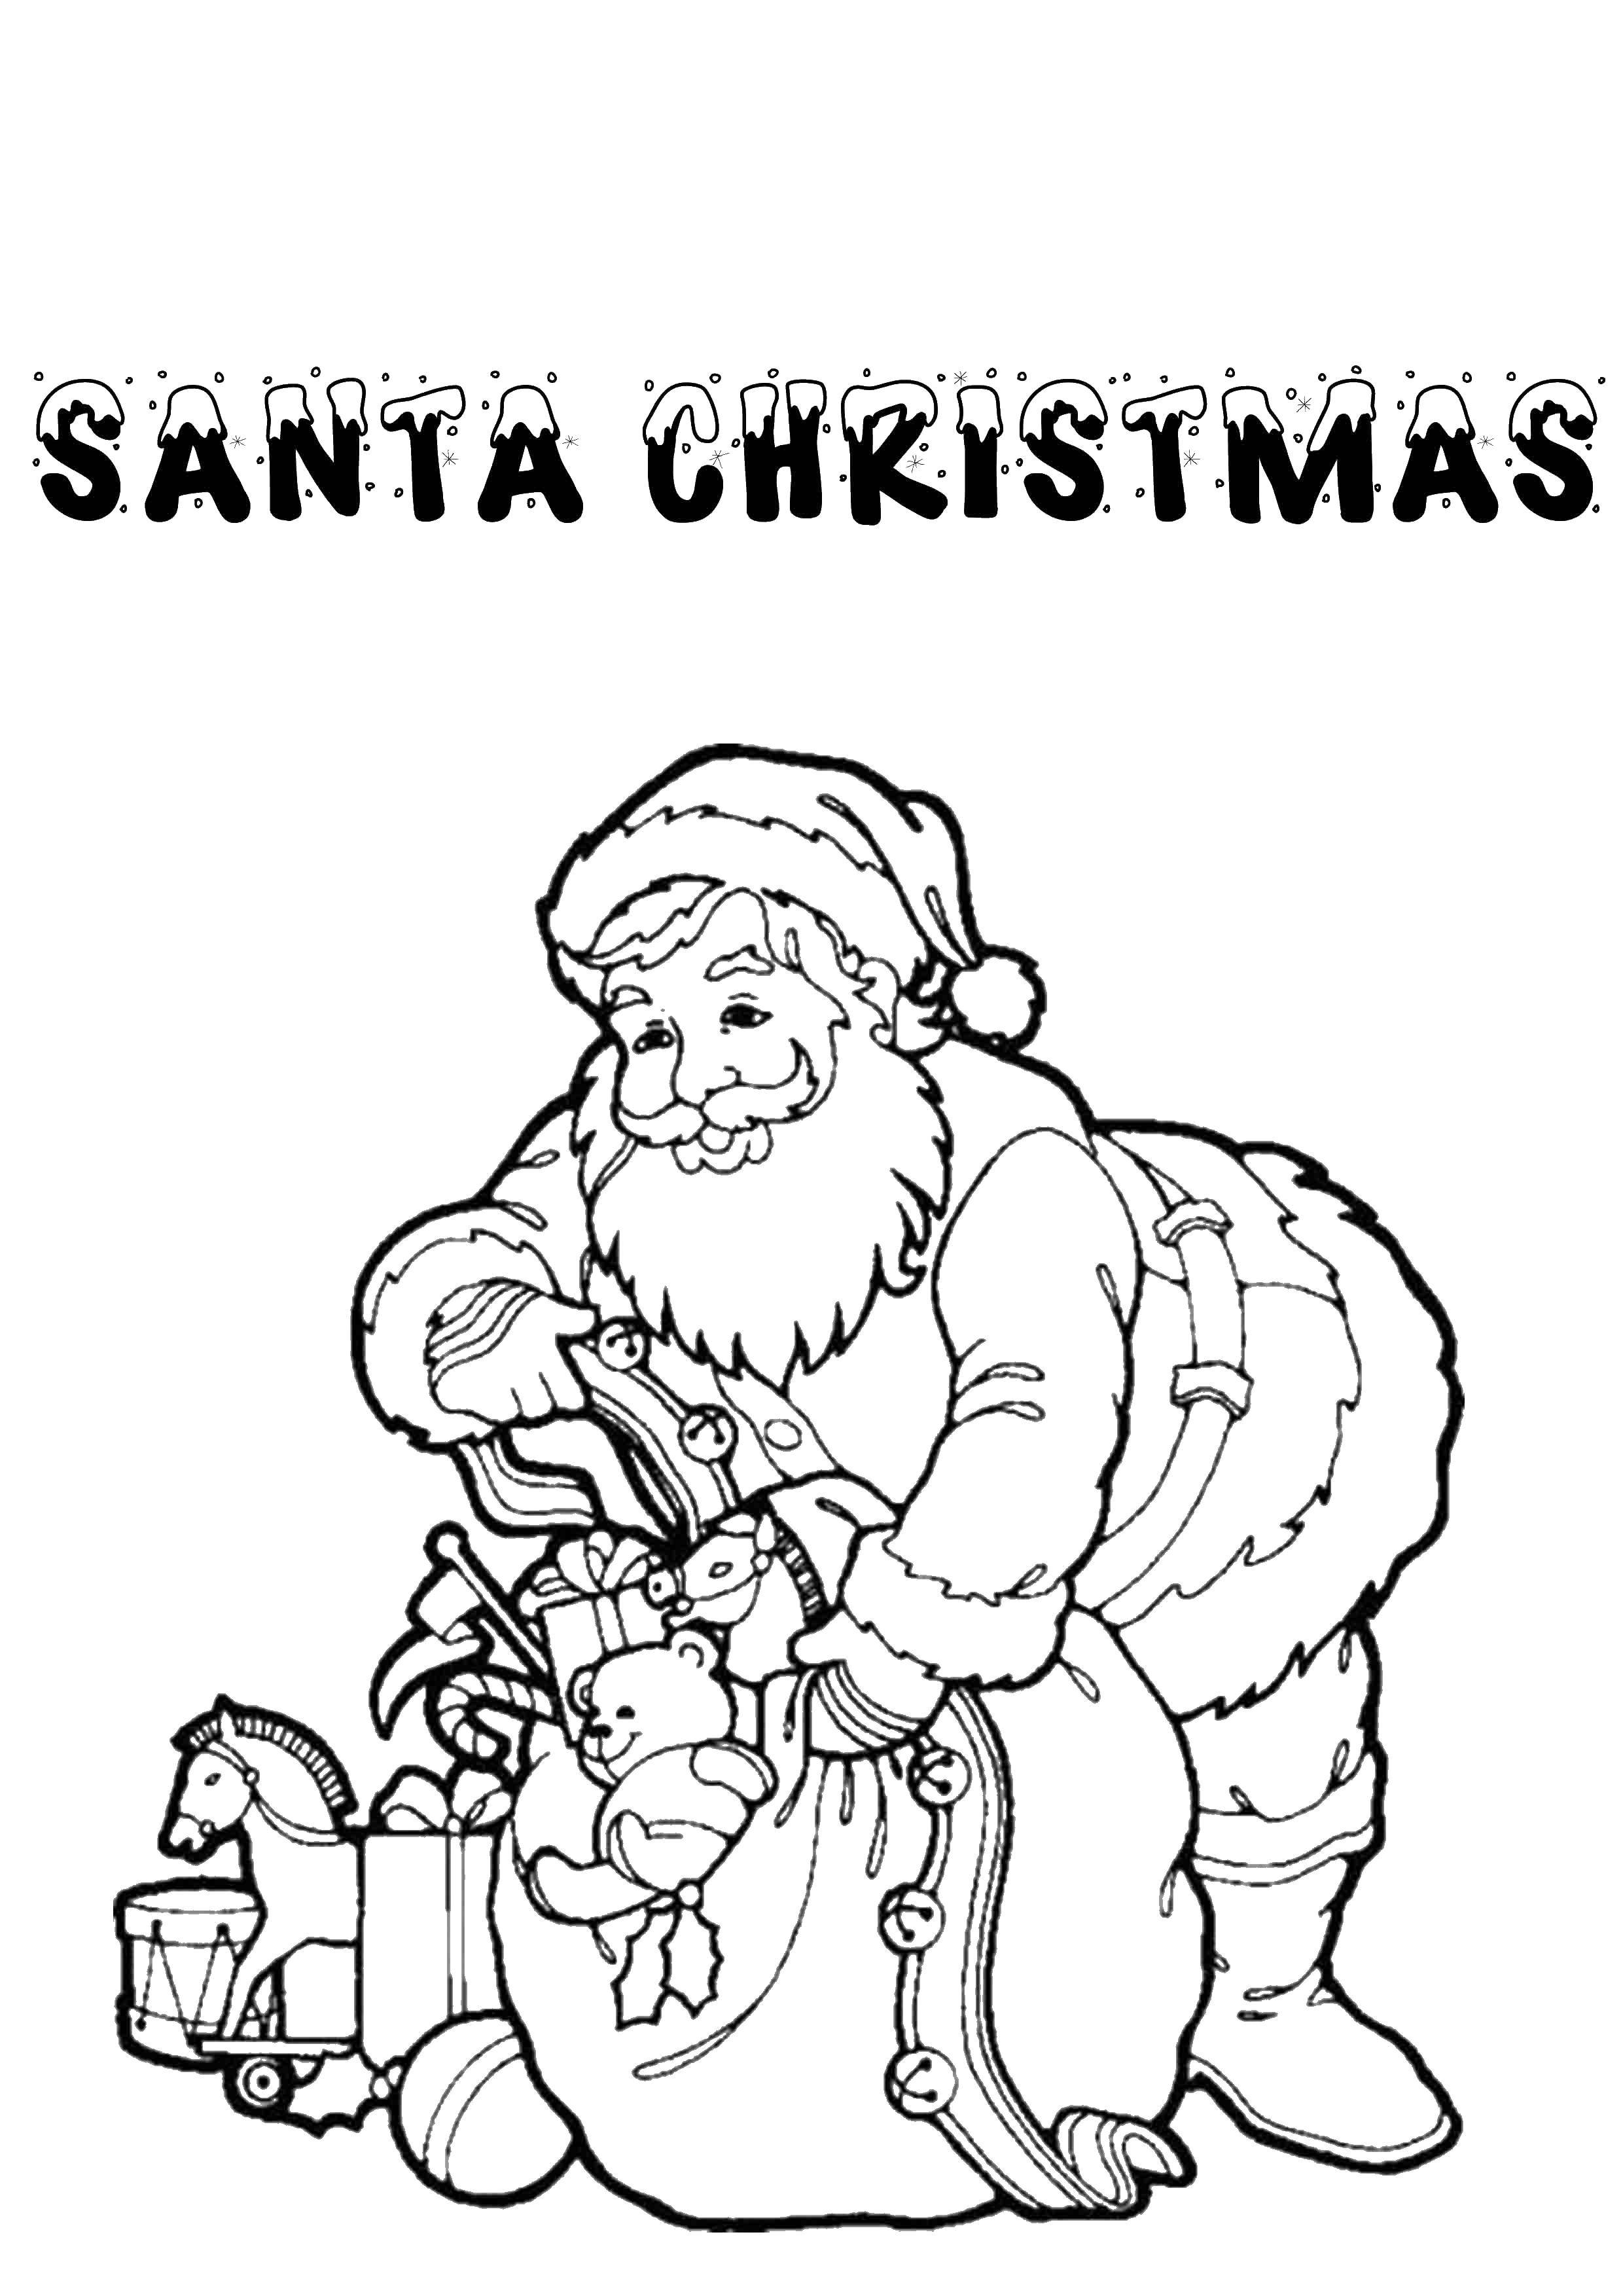 Coloring Santa Claus with gifts. Category Christmas. Tags:  Santa, toys.